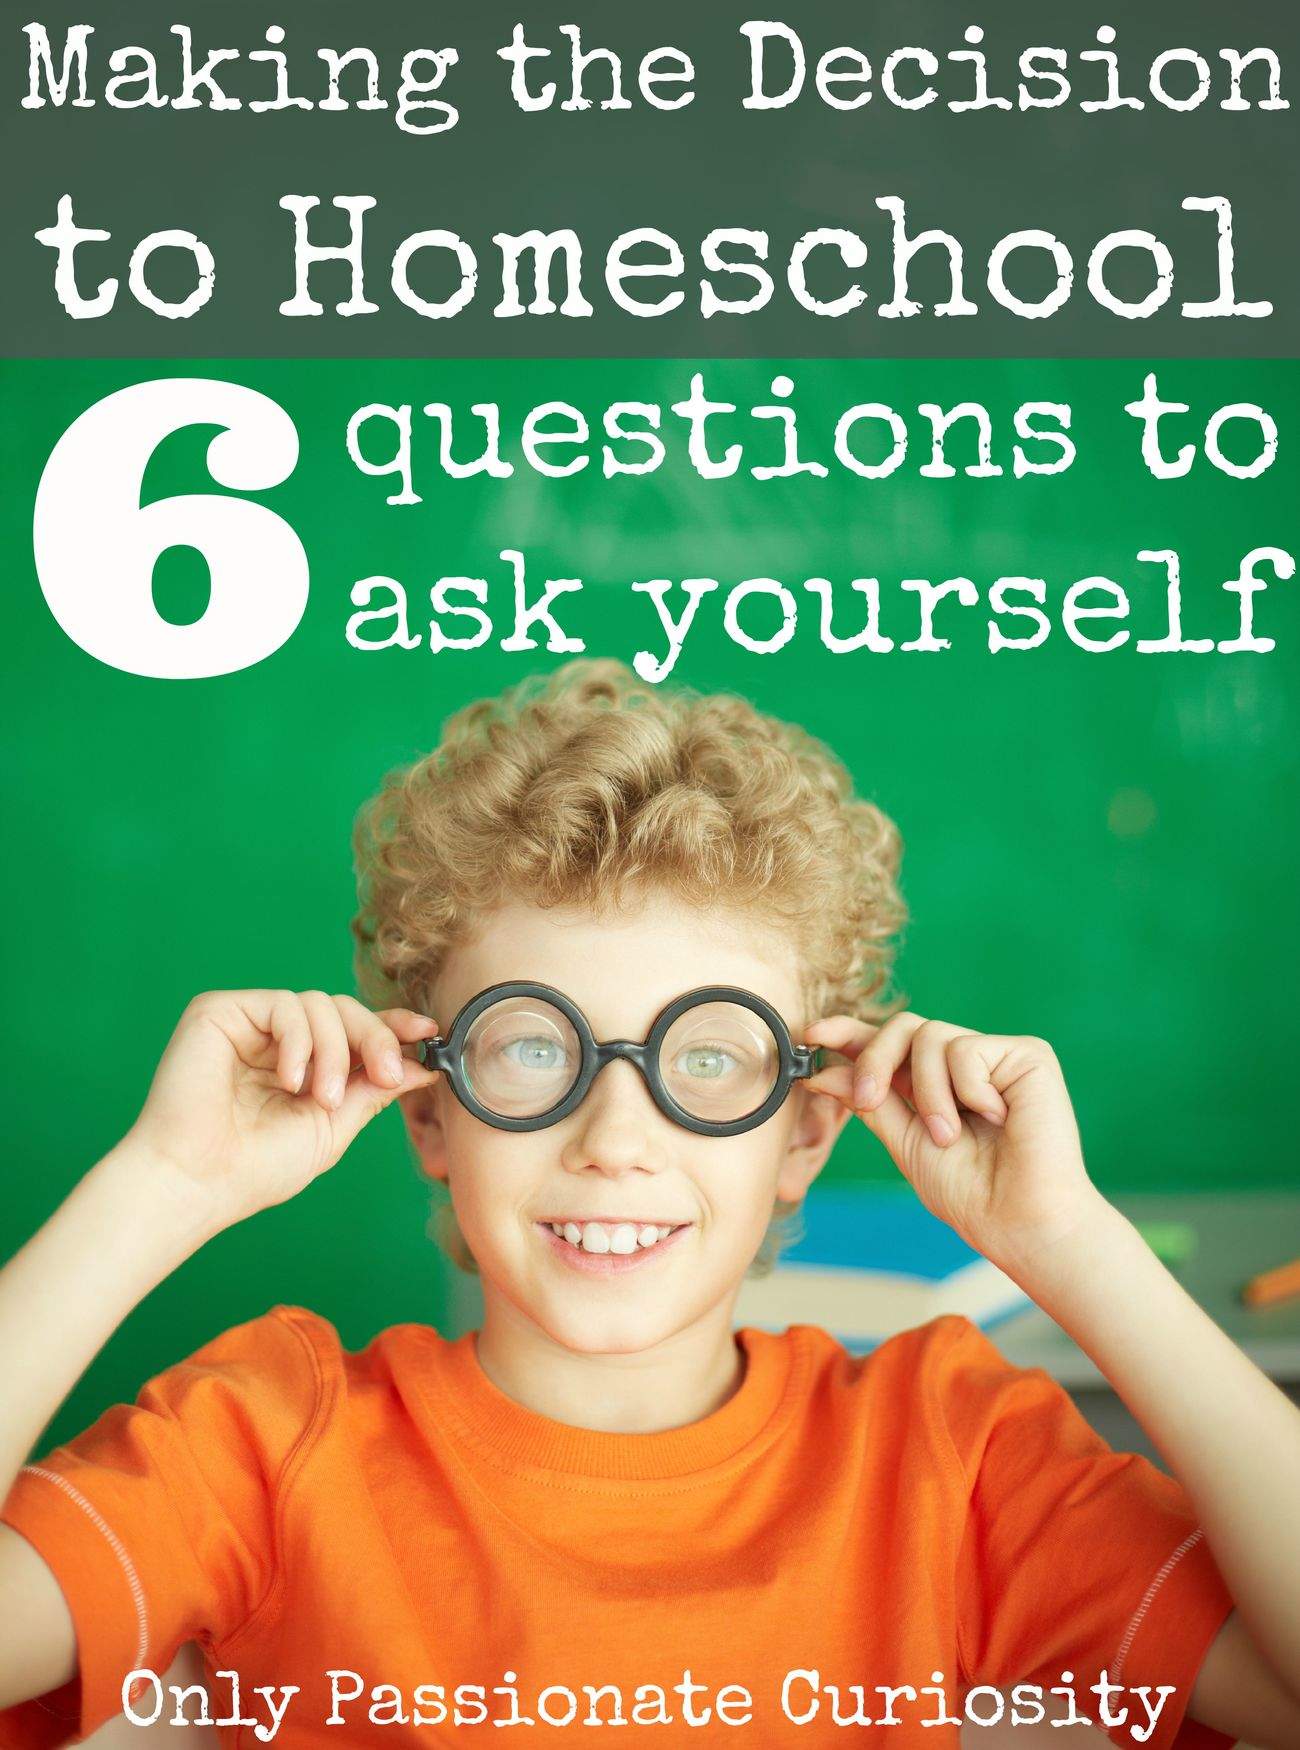 Should you Homeschool Your Kids?